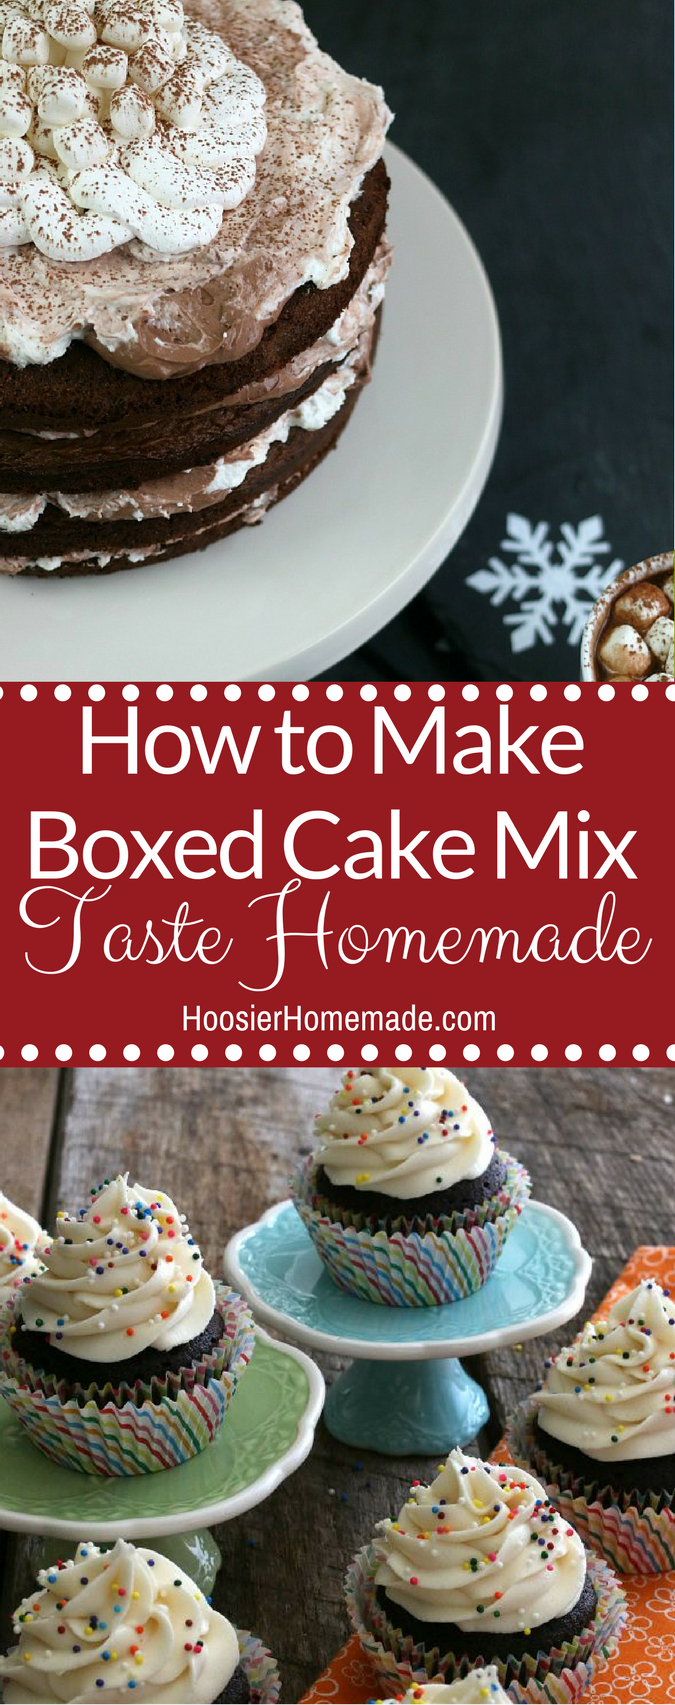 How to make Boxed Cake Mix Taste Homemade